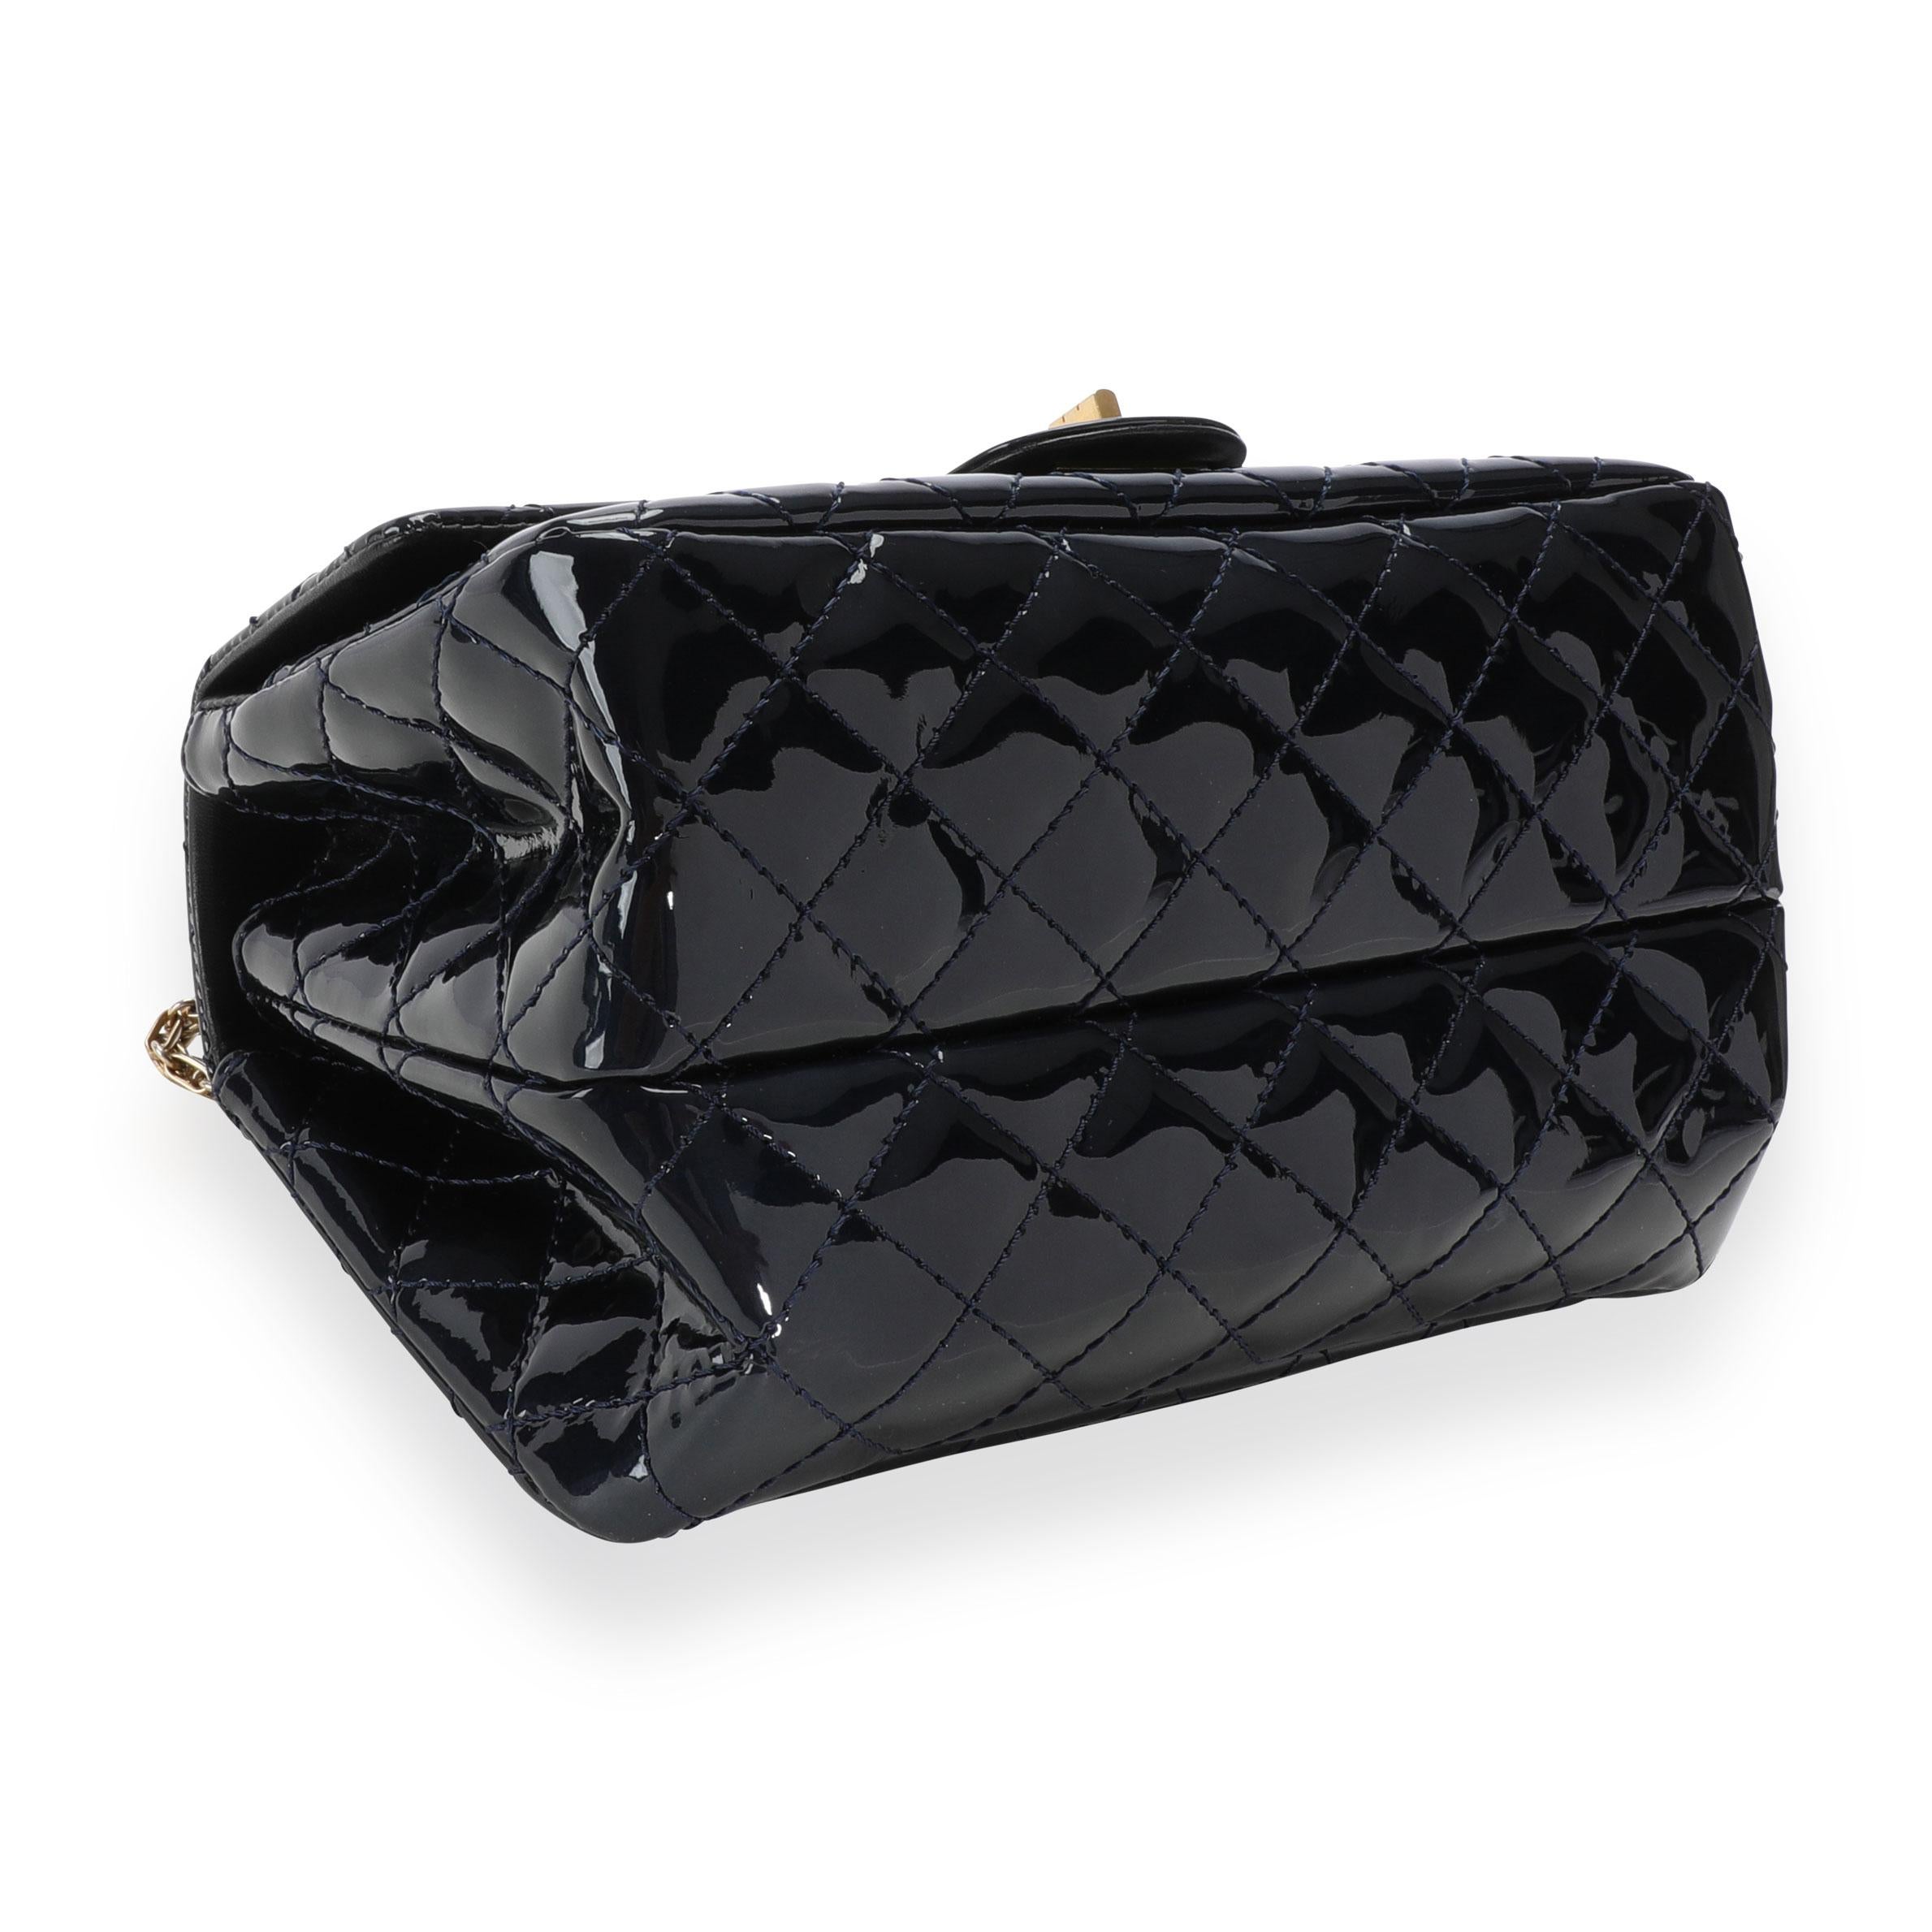 Chanel Marine Foncé Quilted Patent Leather Reissue Double Compartment Flap Bag 3